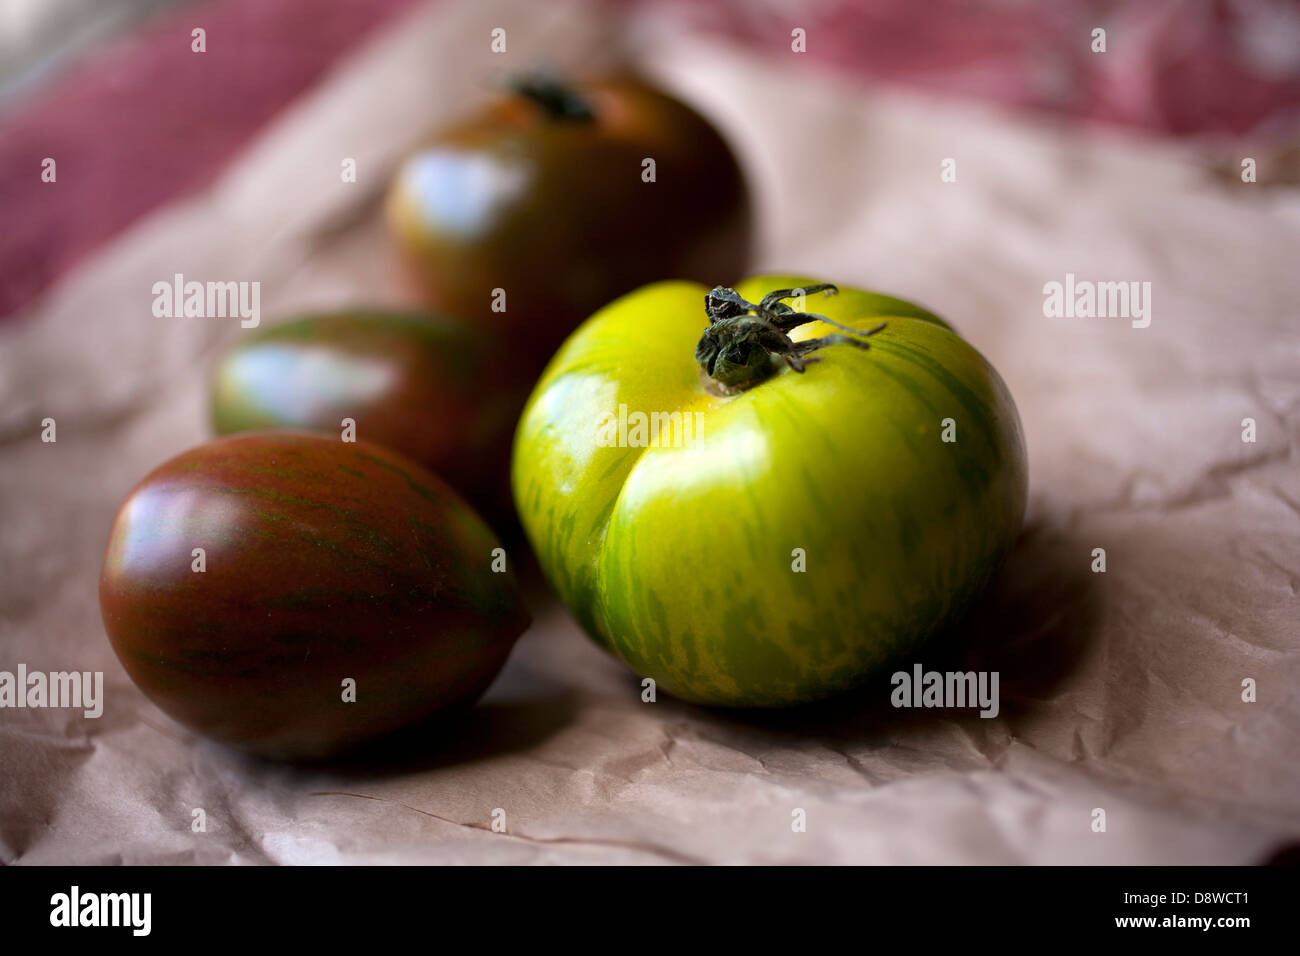 Green Zebra tomato and black tomatoes Stock Photo